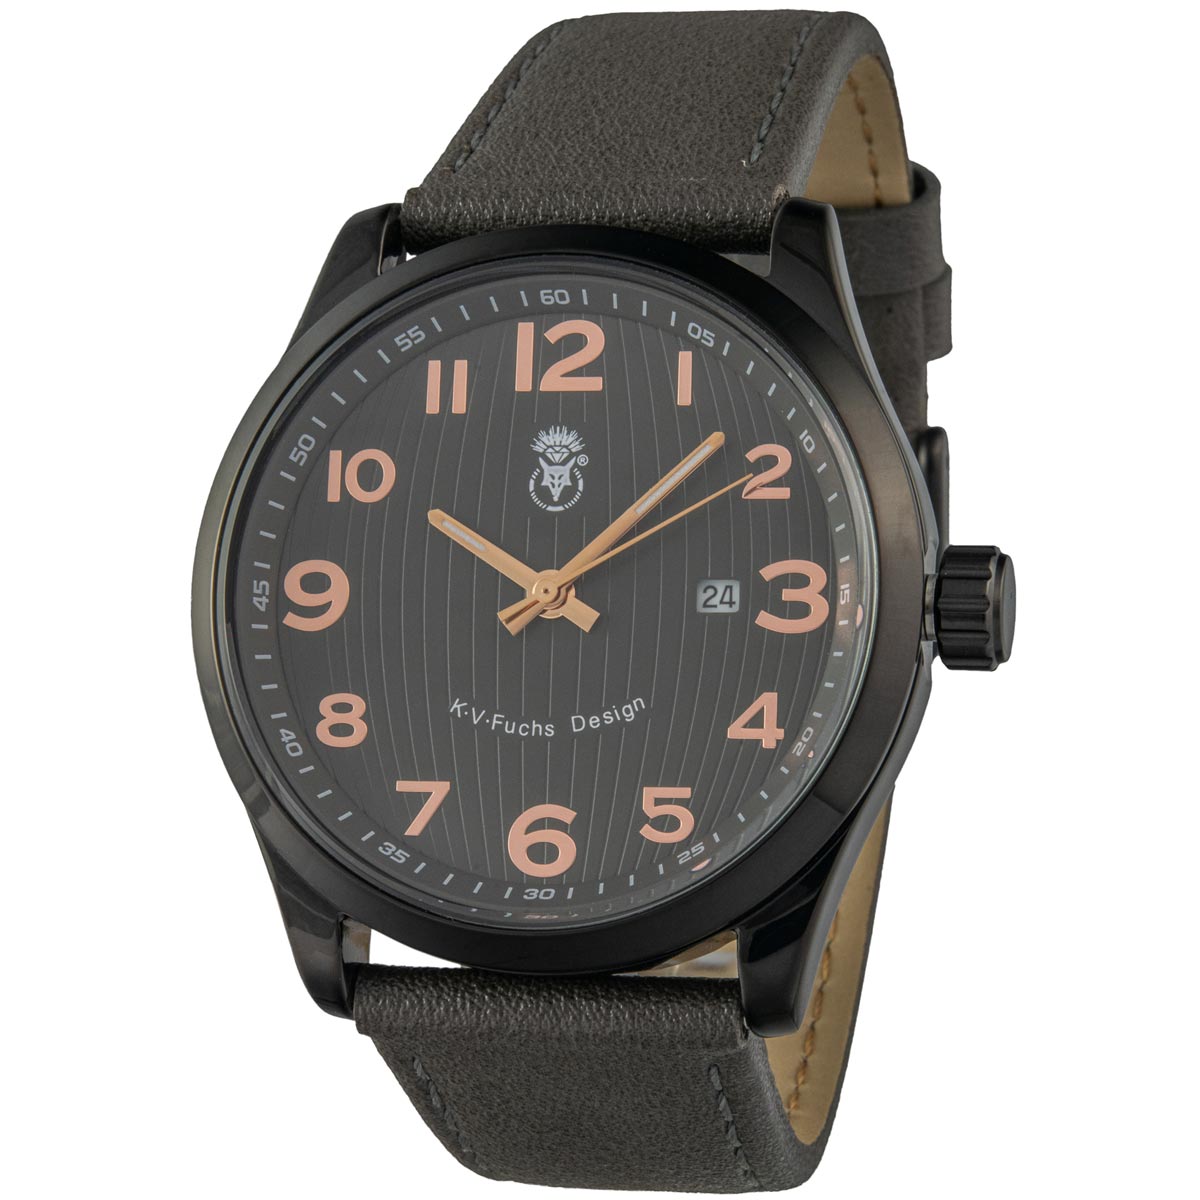 K.V. Fuchs Design Herren Quarzuhr analog Armbanduhr in schwarz, grau mit Lederarmband in grau »U-44-25-Schwarz«